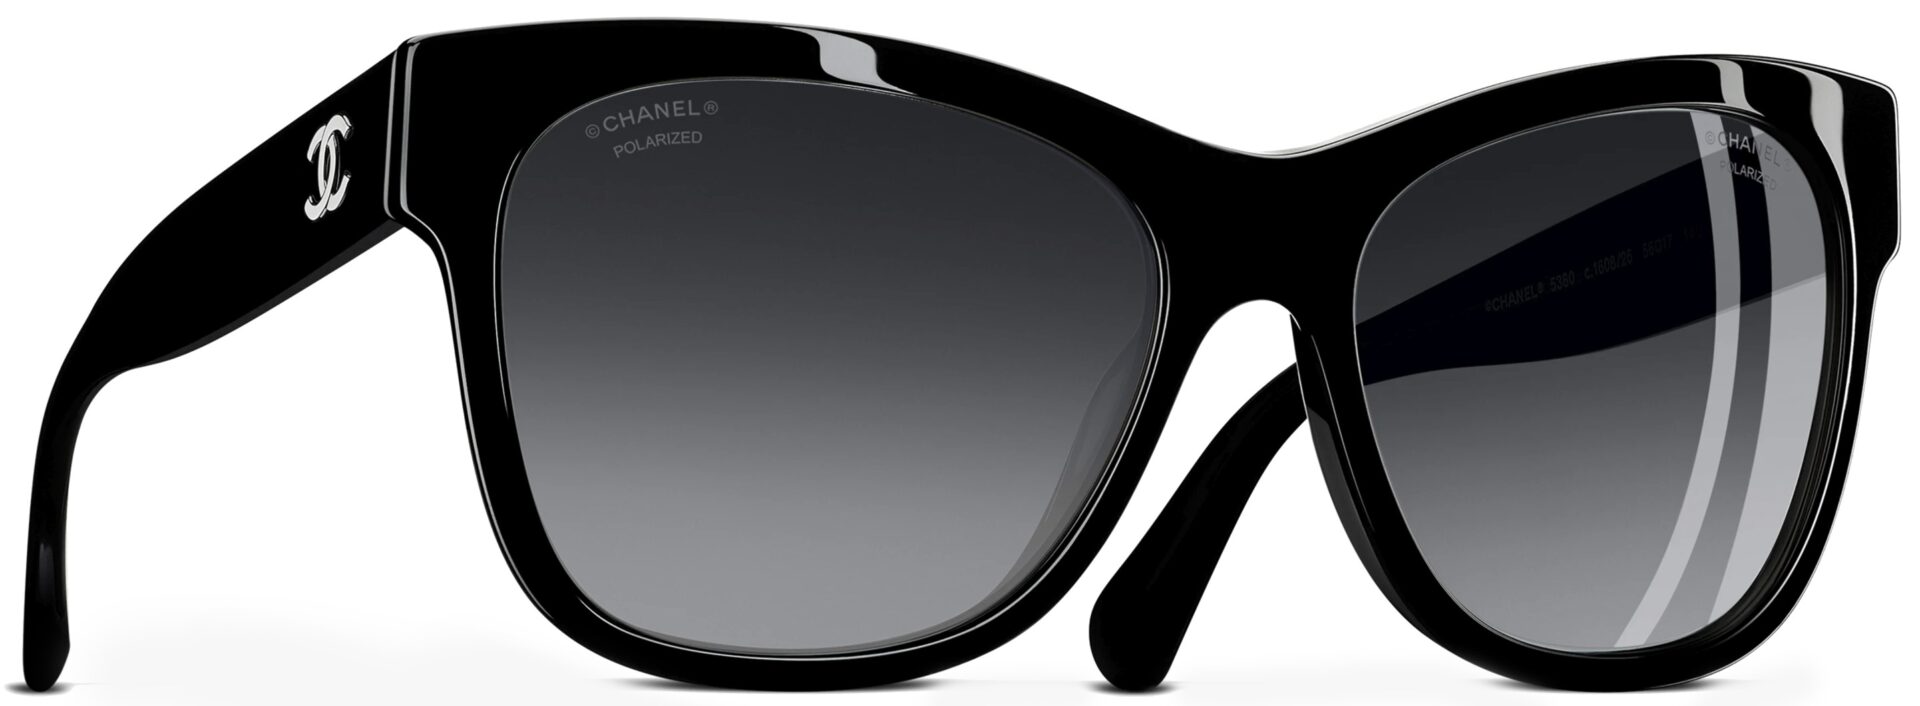 Sunglasses (CL40253 Black) | style